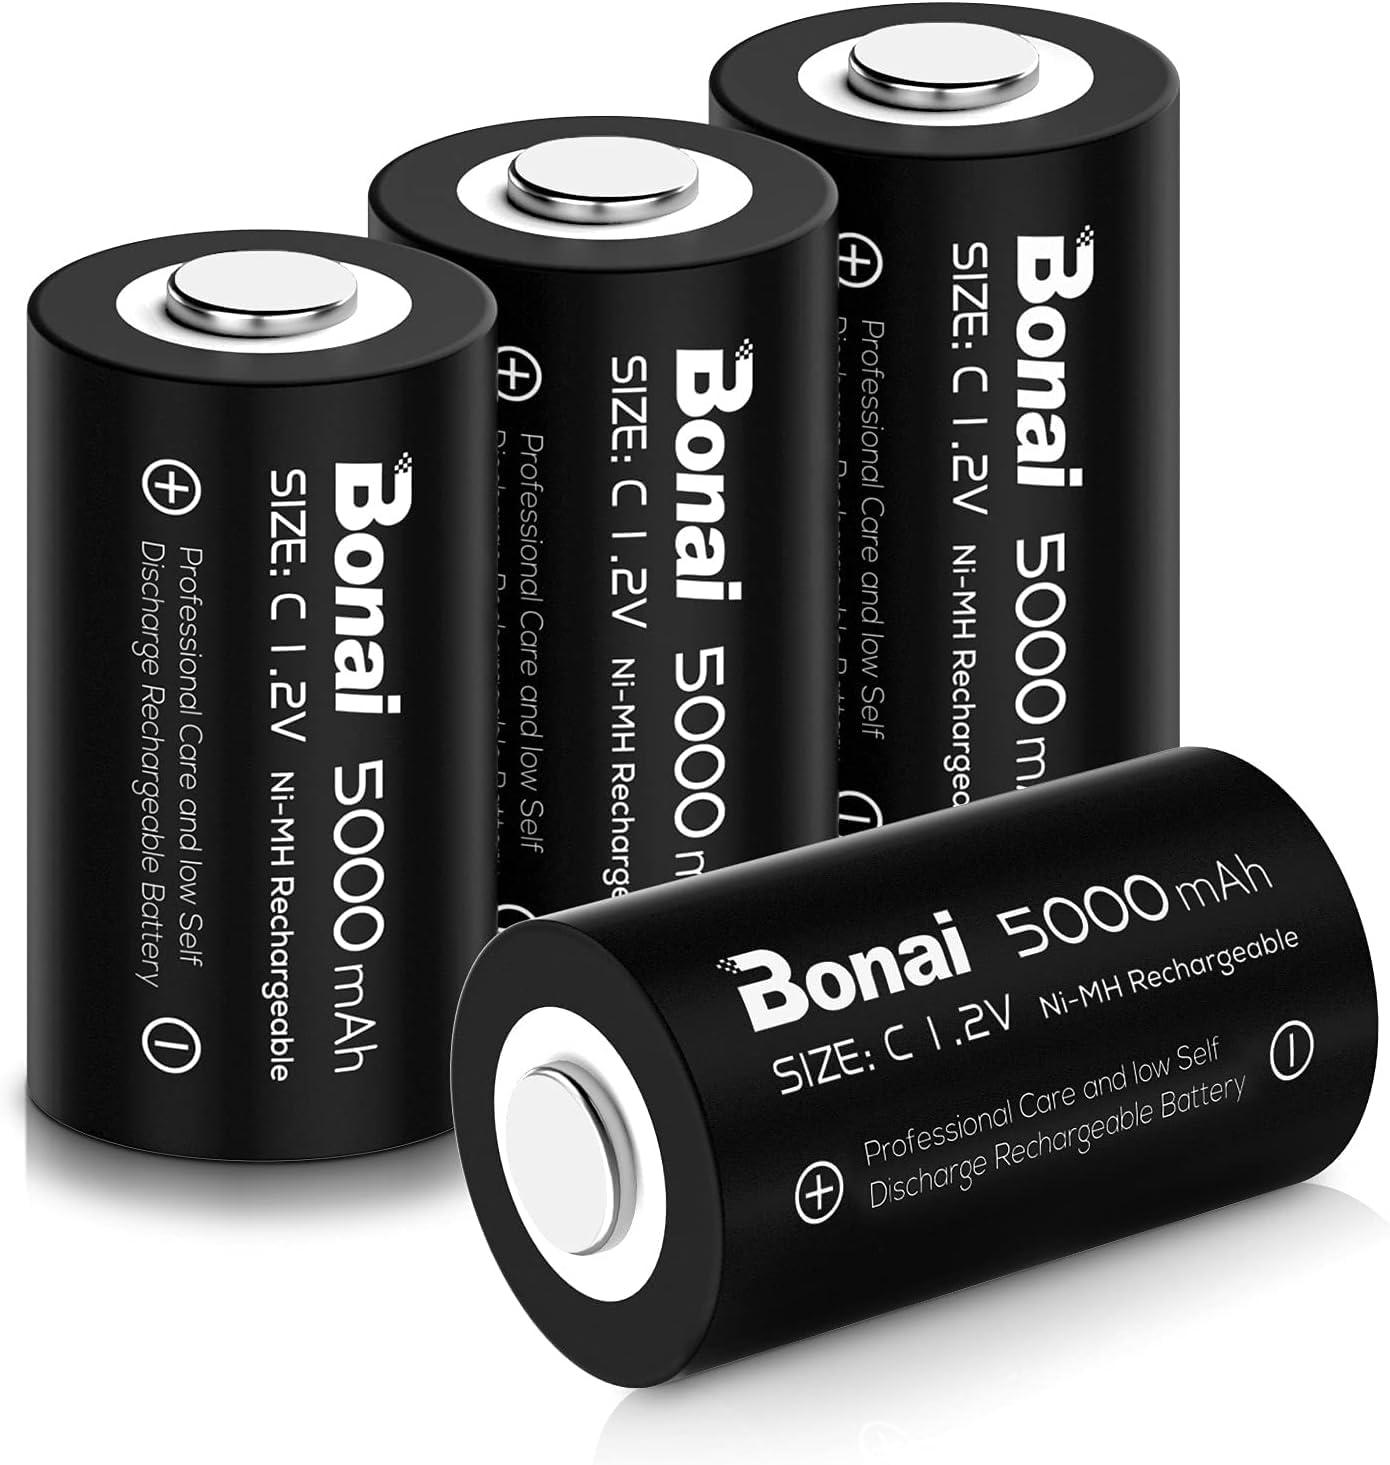 商品情報商品の説明説明 Home Basic Everyday - Bonai Cセル充電式バッテリー4個 5000mAh 電池の特徴: * 数量:Cサイズ5000mAhニッケル水素充電式バッテリー4個パック。 * 電圧:1.2V * 高性能、最大1,200回の充電式サイクル。 ※スマート充電器やユニバーサル充電器で急速充電が可能です。 * 優れた充電/放電性能。初めて使用したとき、または長時間使用しない場合、3~5回の充電と放電の後、バッテリーは高品質を維持します。 * 通常のアルカリ電池よりも高ドレインデバイスでの長寿命。 * Hg/Cd/Pbを含まず、環境への汚染はありません。 * LEDキャンドル、懐中電灯、ortable CDやMP3プレーヤー、デジタルカメラ、子供のおもちゃなどの高電力需要デバイスに最適です。 * 丈夫なケース、収納や持ち運びに便利です。 【パッケージ内容】 Bonai Cサイズ1.2V充電式バッテリー4個。主な仕様 ?【仕様】1.2V 単二充電電池 5000mAh 高容量 充電式電池 4本br?【低自己放電】低自己放電技術により、3年間電池を放置していた場合でも75%の容量を維持できます。密閉型で液漏れ防止、低温でも寒い場所でも性能を発揮できますbr?【繰り返し充電】負け極端子表面に施された独自の処理が、1200回の充電を繰り返し使っても劣化が少ないです。Hg/Cd/Pdなどの有害物を使わず、エコタイプの電池です。br?【なデバイスに適用】全ての単二形充電池対応のデバイスが使用可能です。おもちゃ、LEDライト、ラジオ、センサーライト、目覚まし時計,懐中電灯 を提供します。br?【品質アフターサービス】弊社は、お客様に高のショッピング体験を提供していきたいと考えています。 使用中に問題が発生した場合は、お気軽にお問い合わせください。満足のいくアフターサービスをご提供いたします！